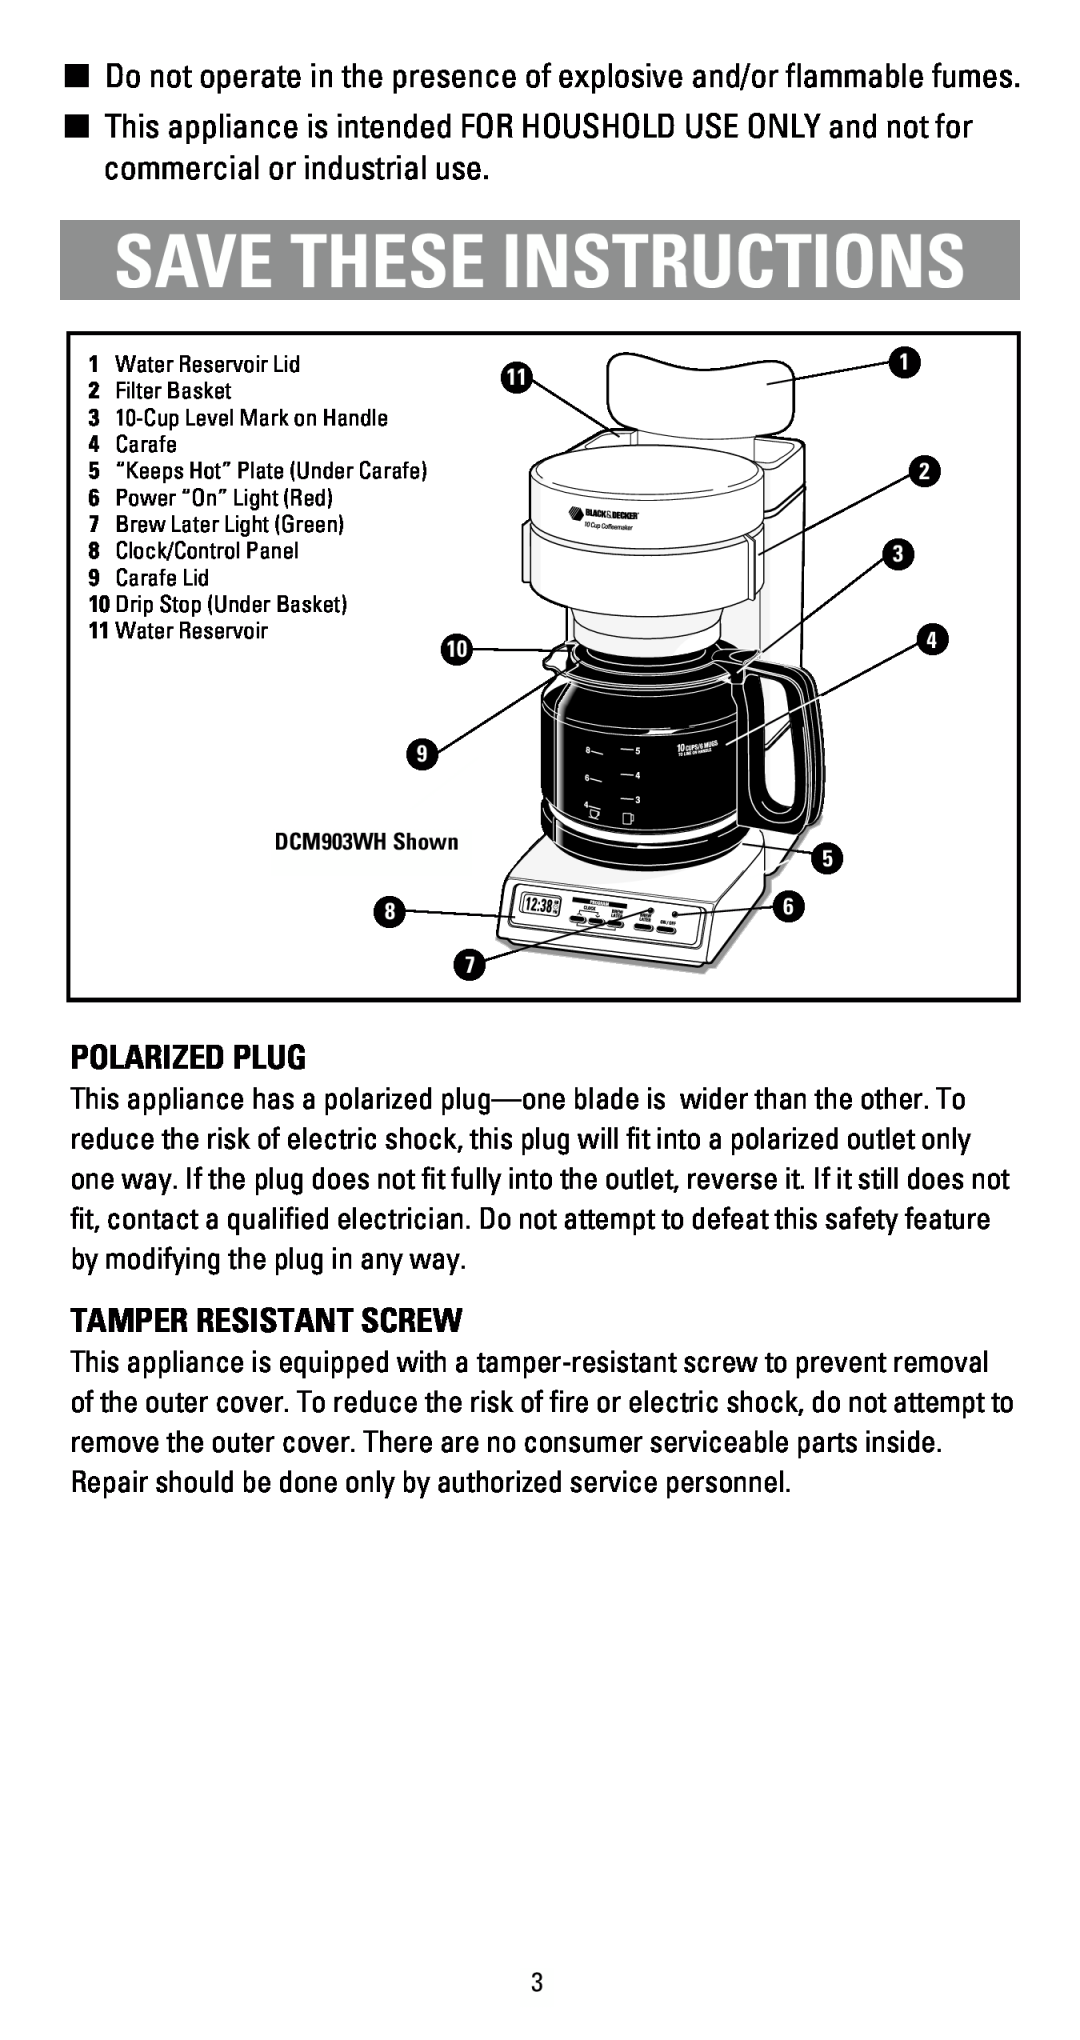 Black & Decker DCM300 Sries, DCM900 Sries manual Save These Instructions, Polarized Plug, Tamper Resistant Screw 